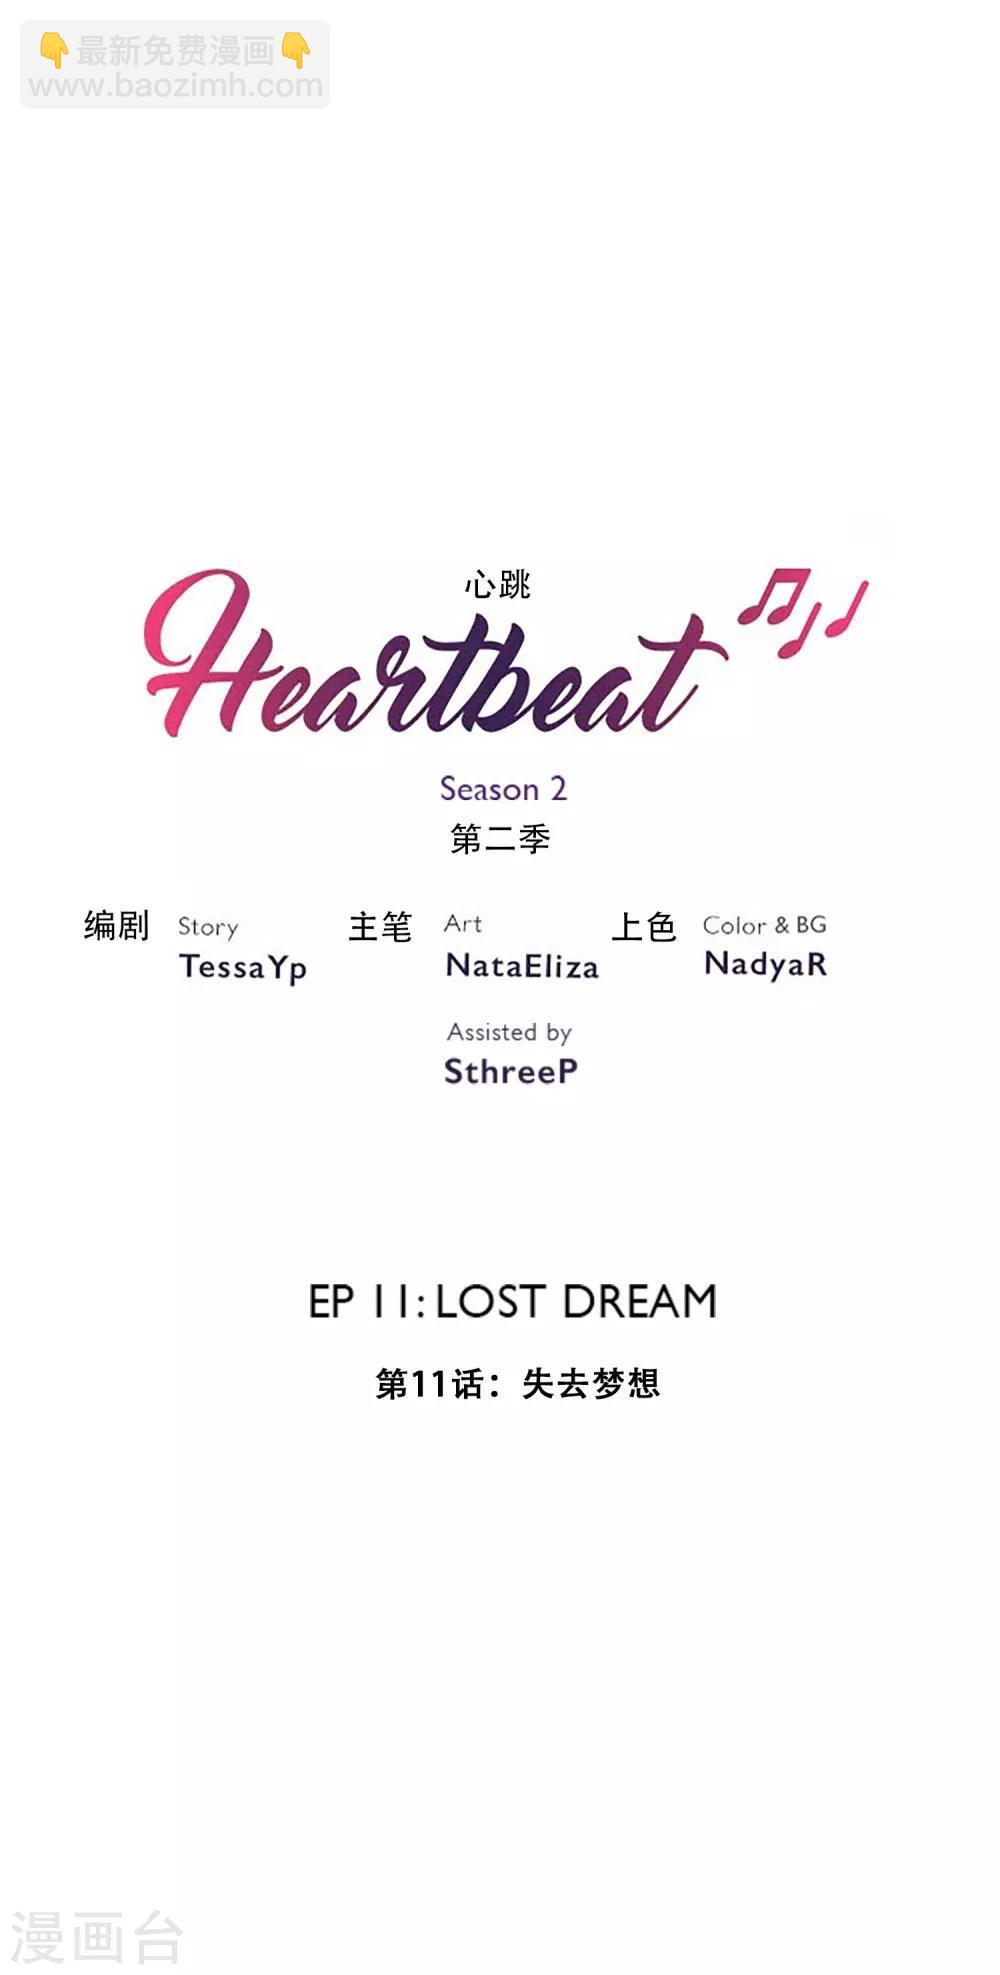 Heartbeat - 第24話 失去夢想 - 2